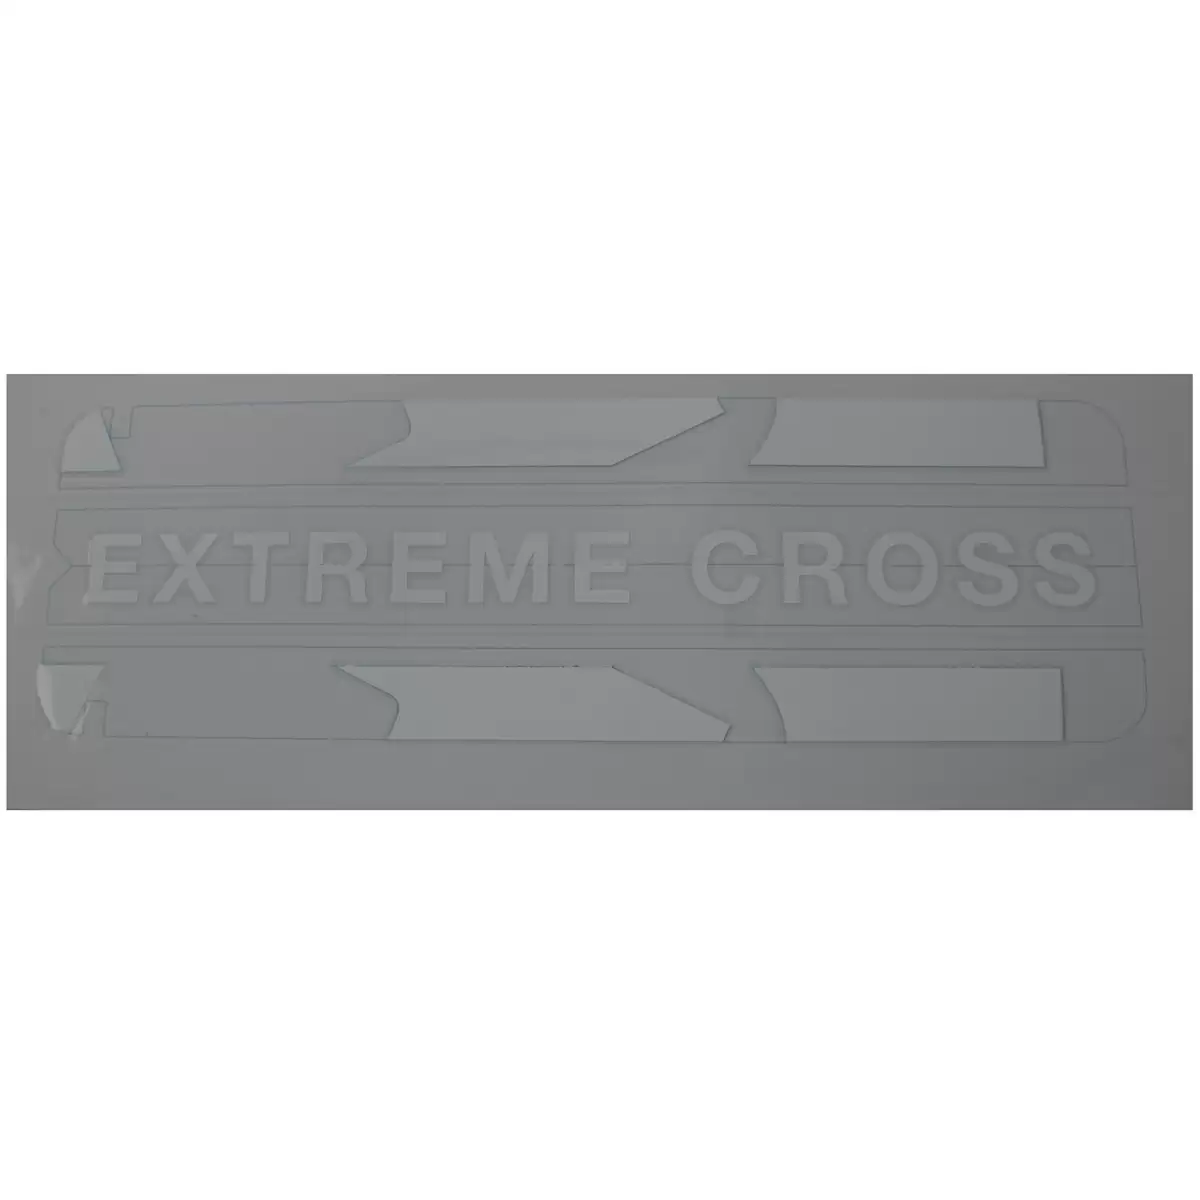 Adesivo cover batteria Extreme Cross bianco - image